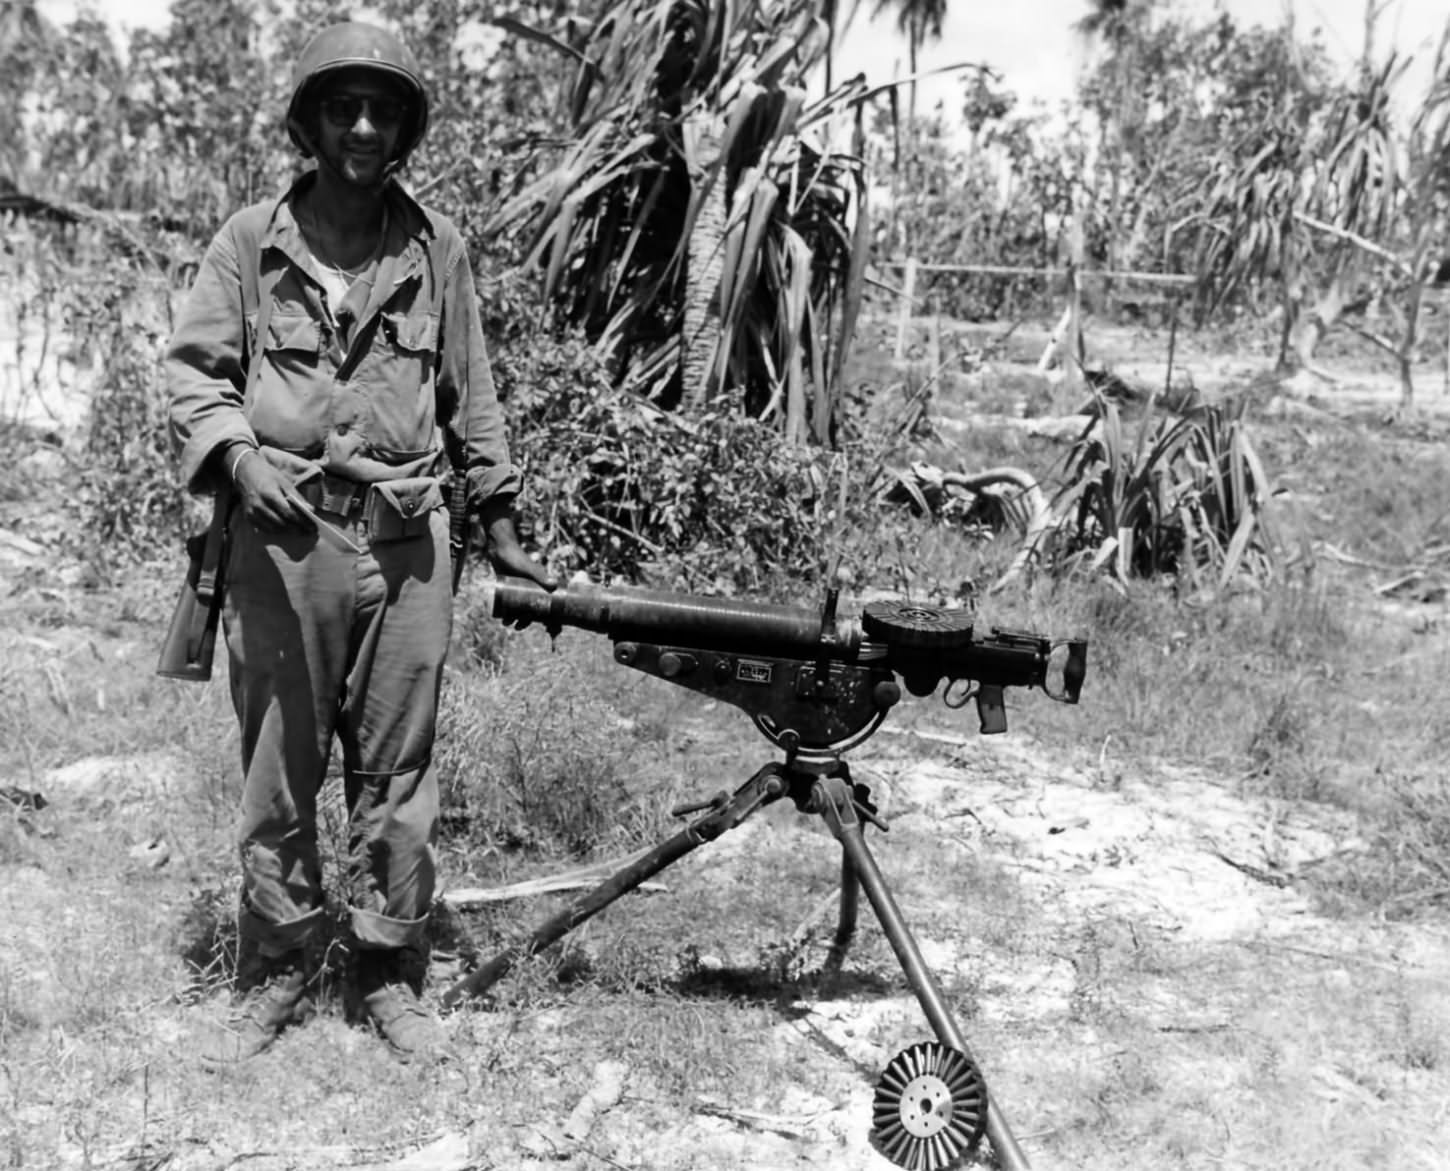 Captured Type 92 Lewis machine gun on tripod, Makin 1943